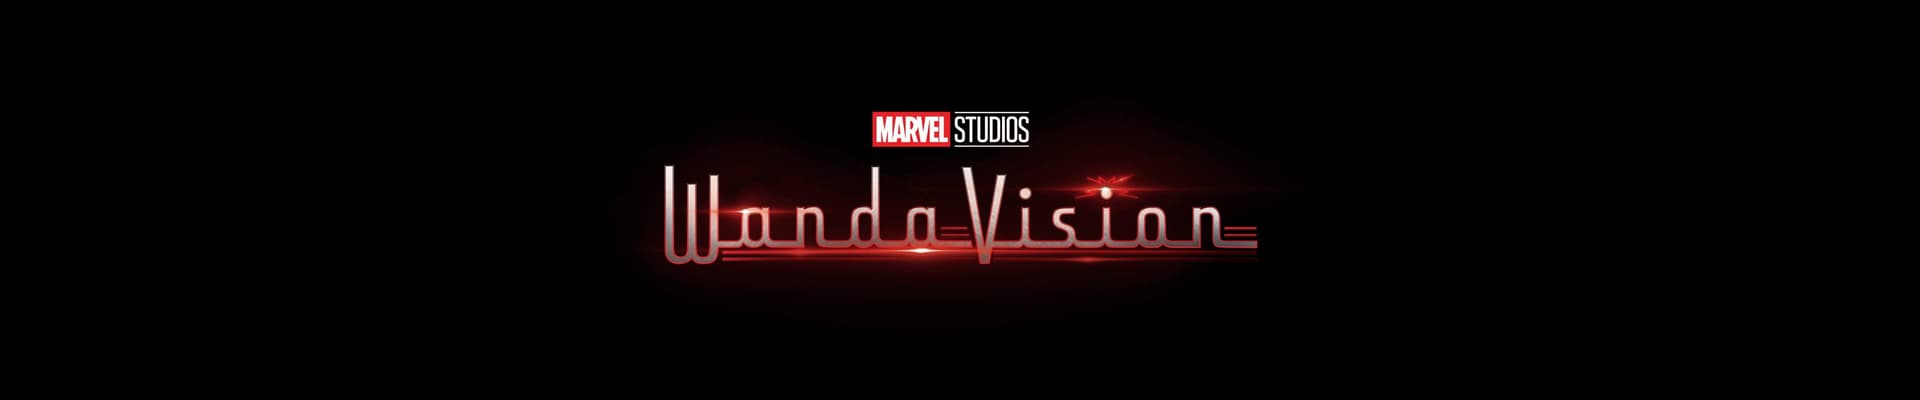 WandaVision Season 1 Show Logo on Black